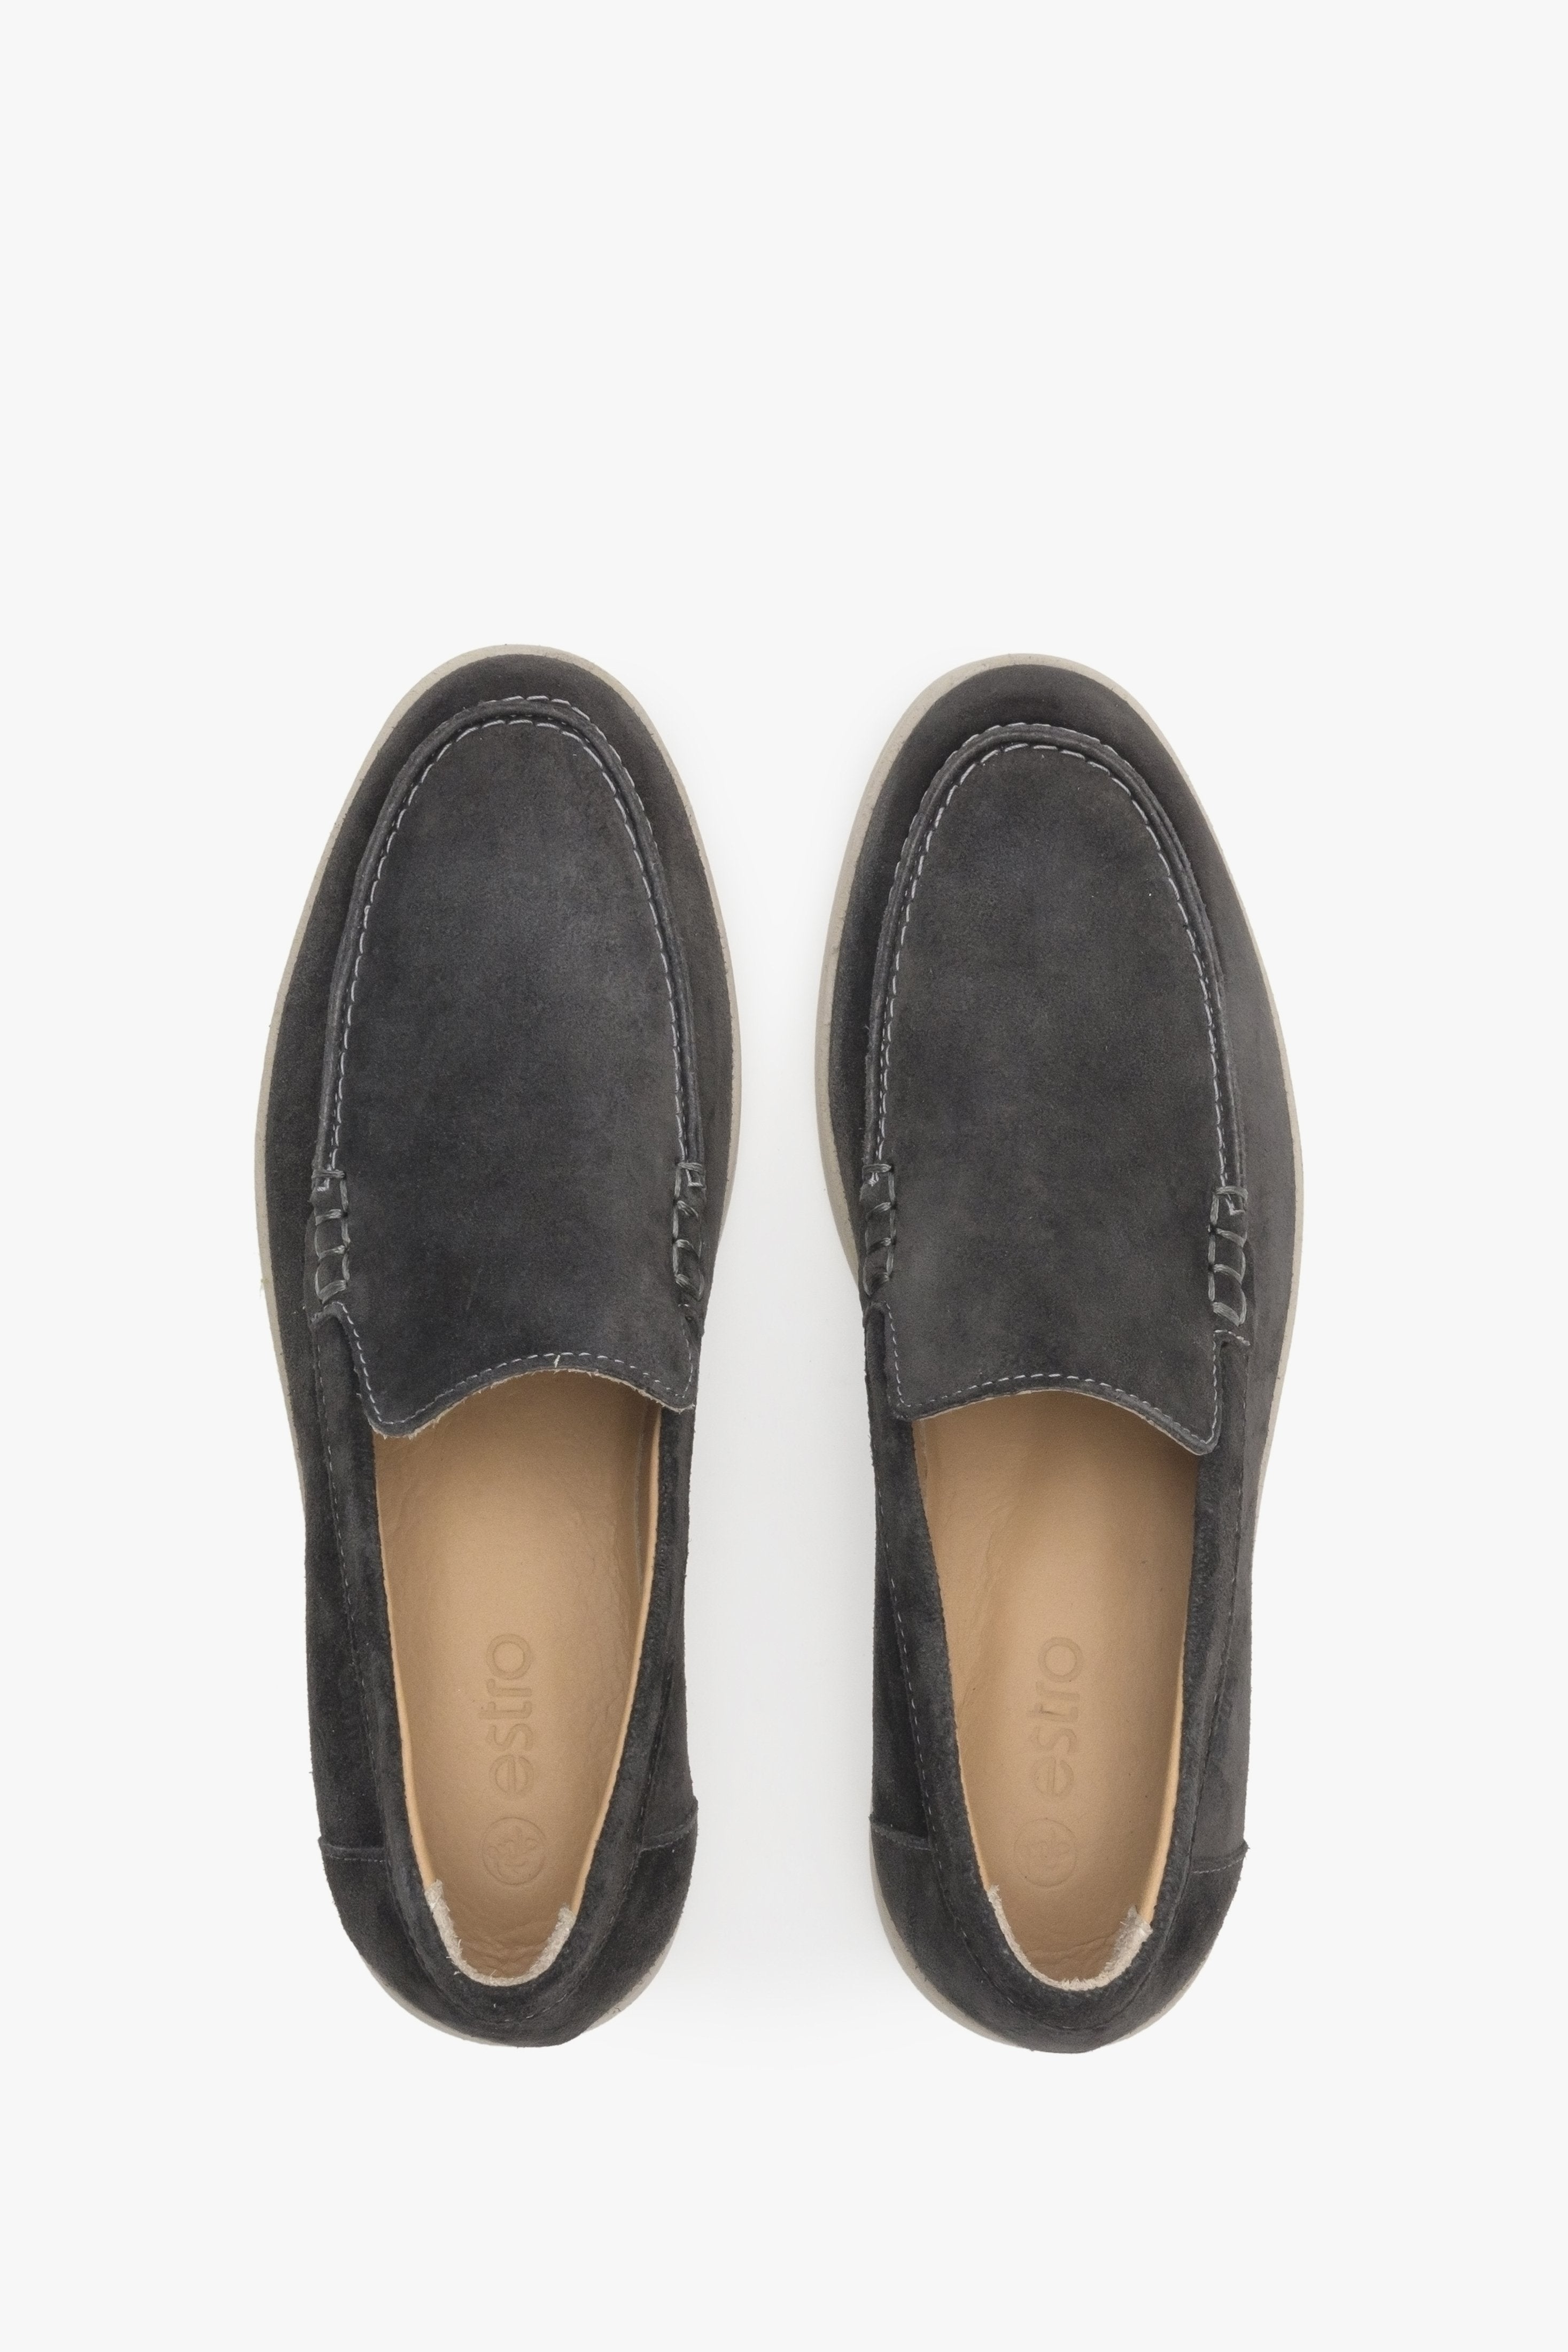 Feminine dark grey suede loafers - presentation of the footwear from above.